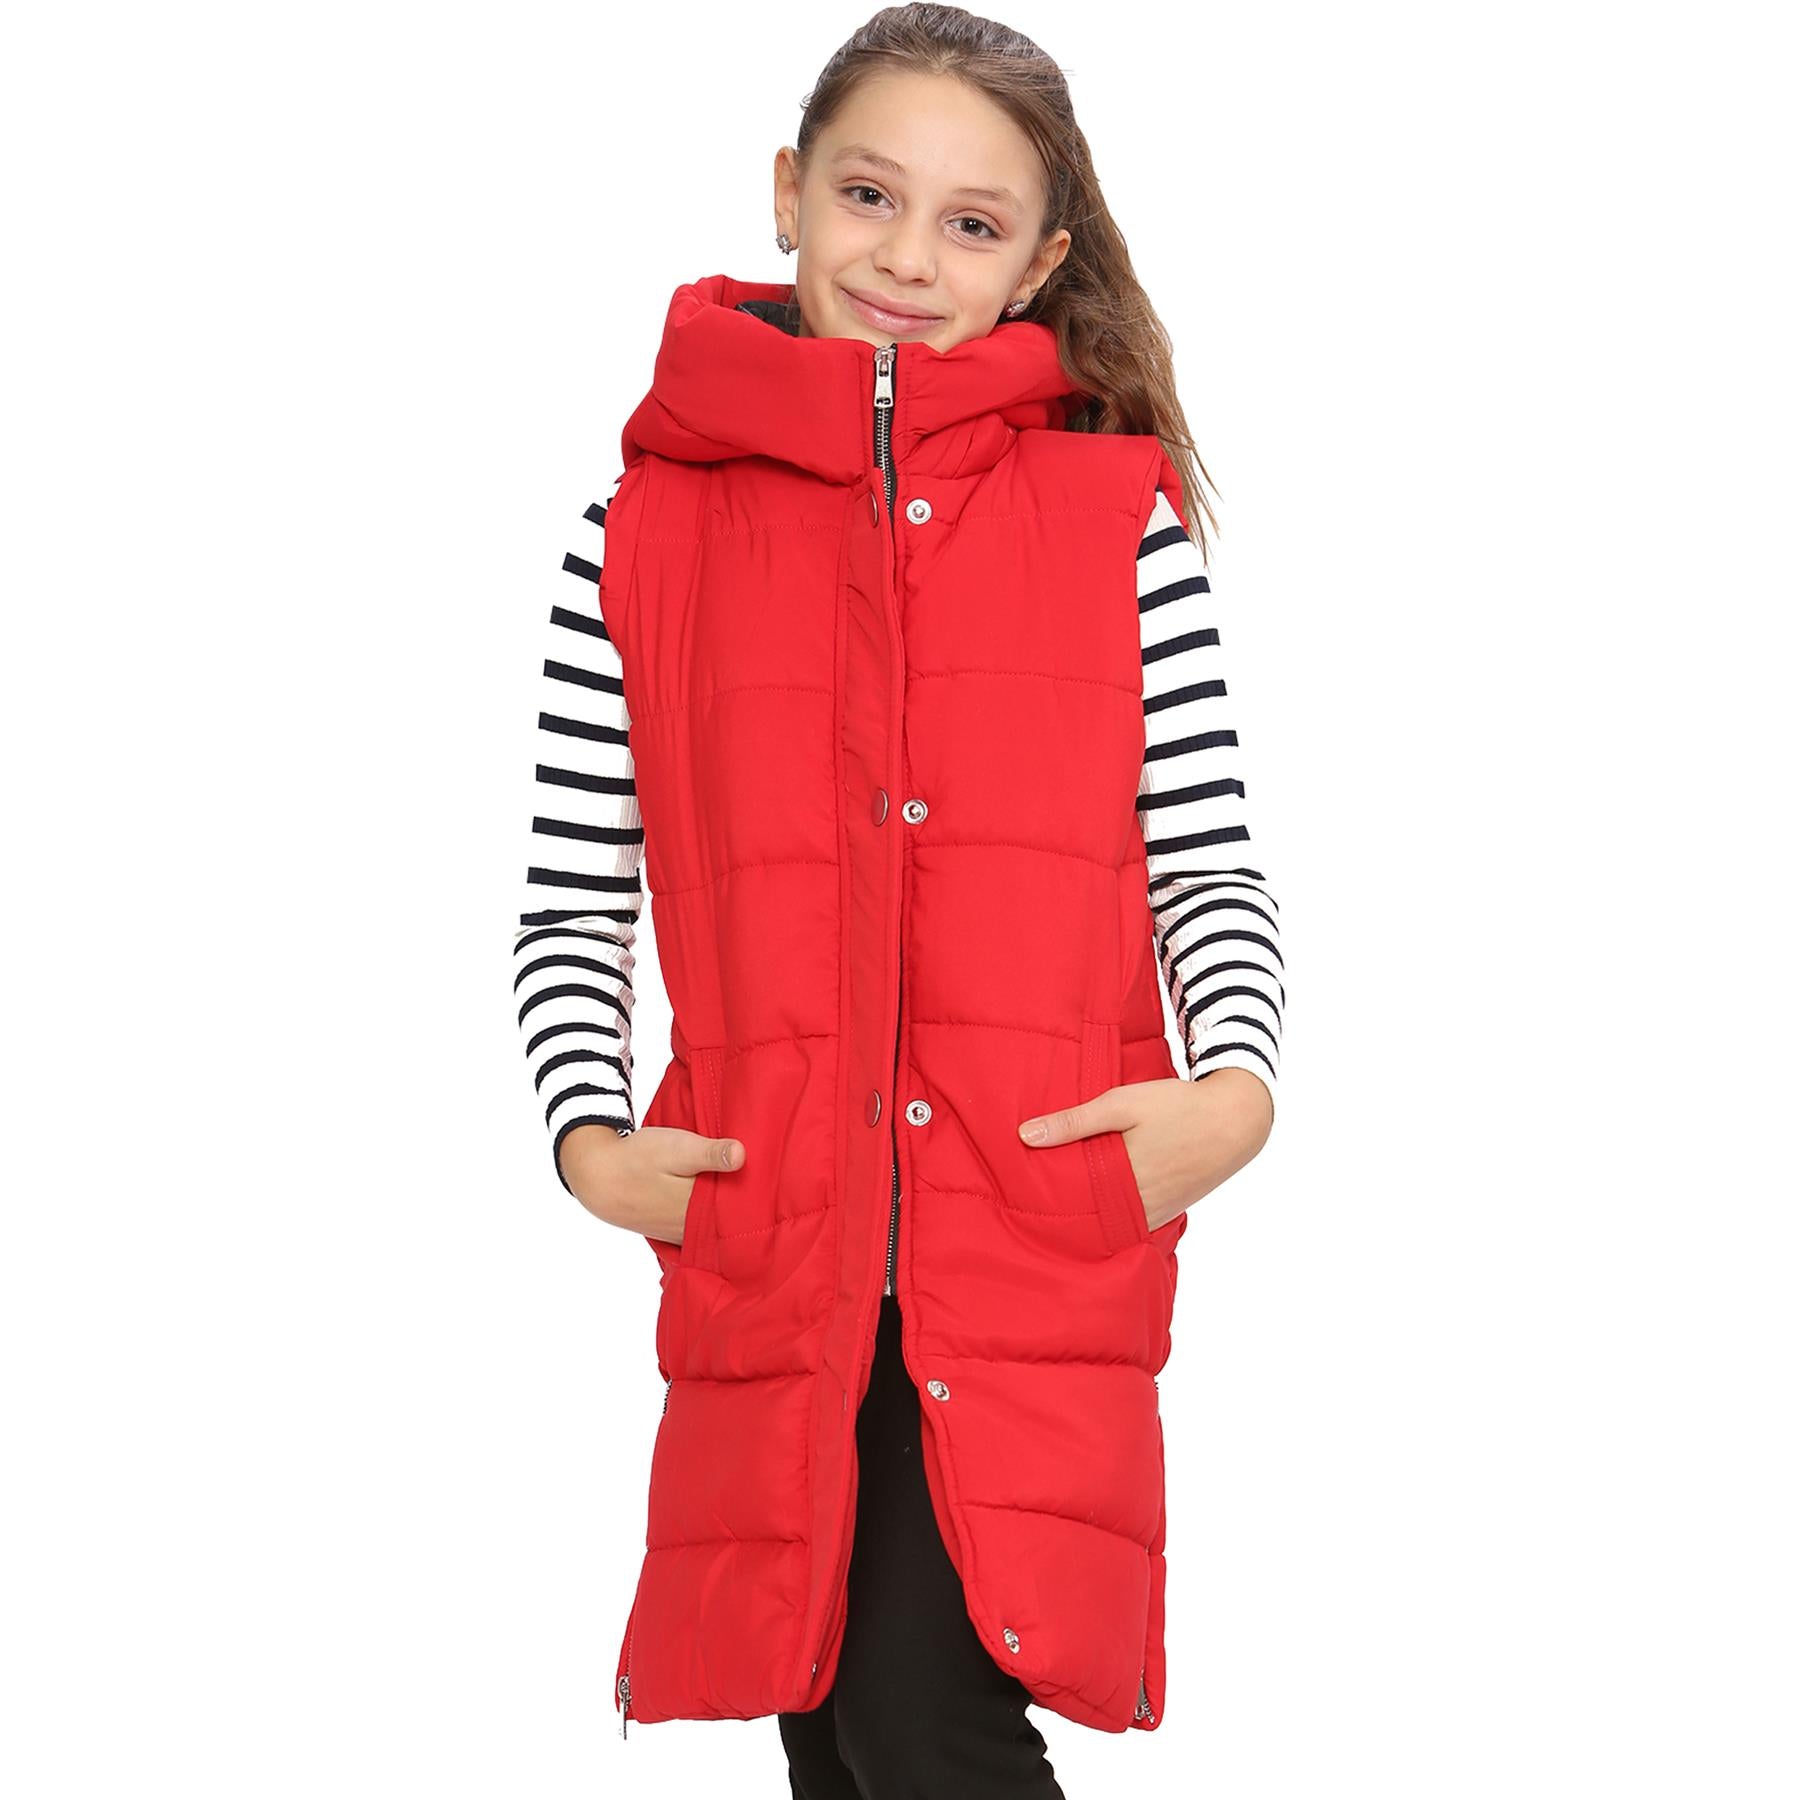 Kids Girls Red Gilet Long Line Style Jacket